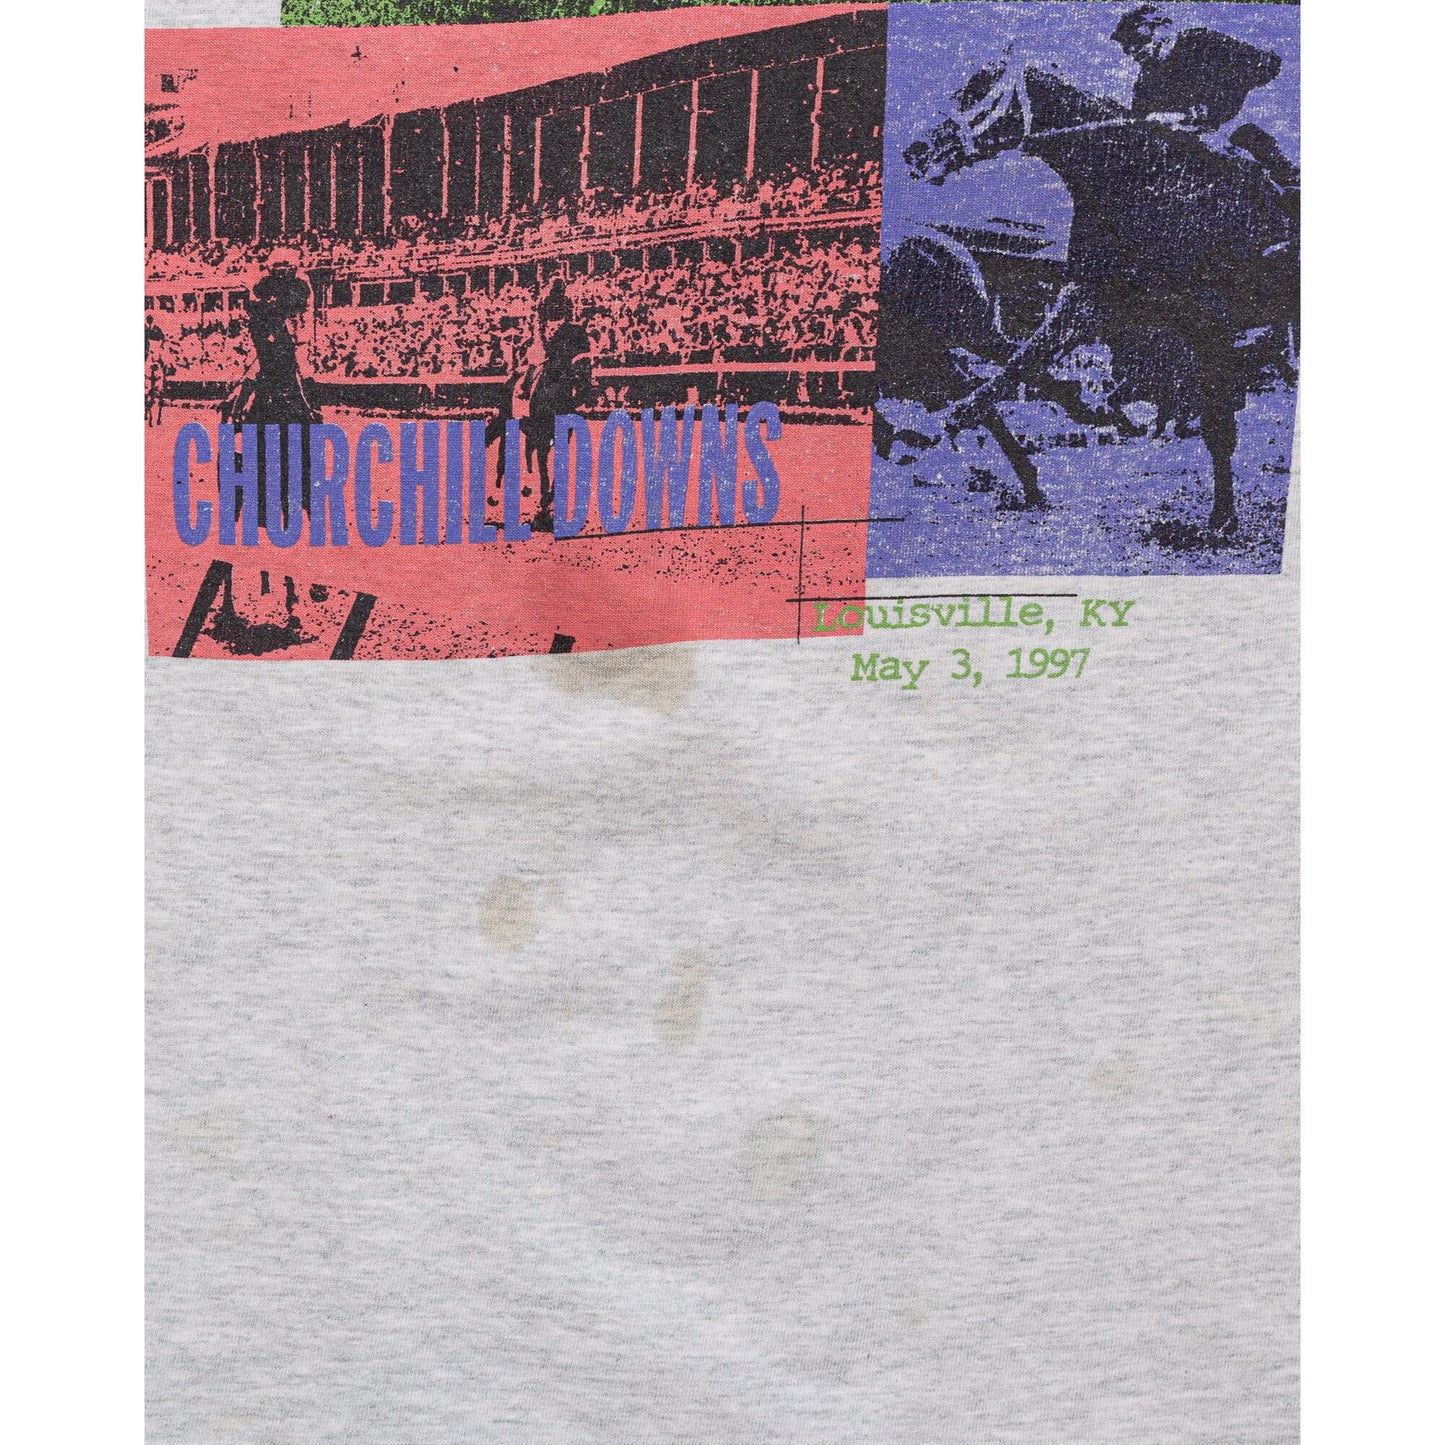 Vintage 1997 Kentucky Derby T Shirt - Men's Large, Women's XL 